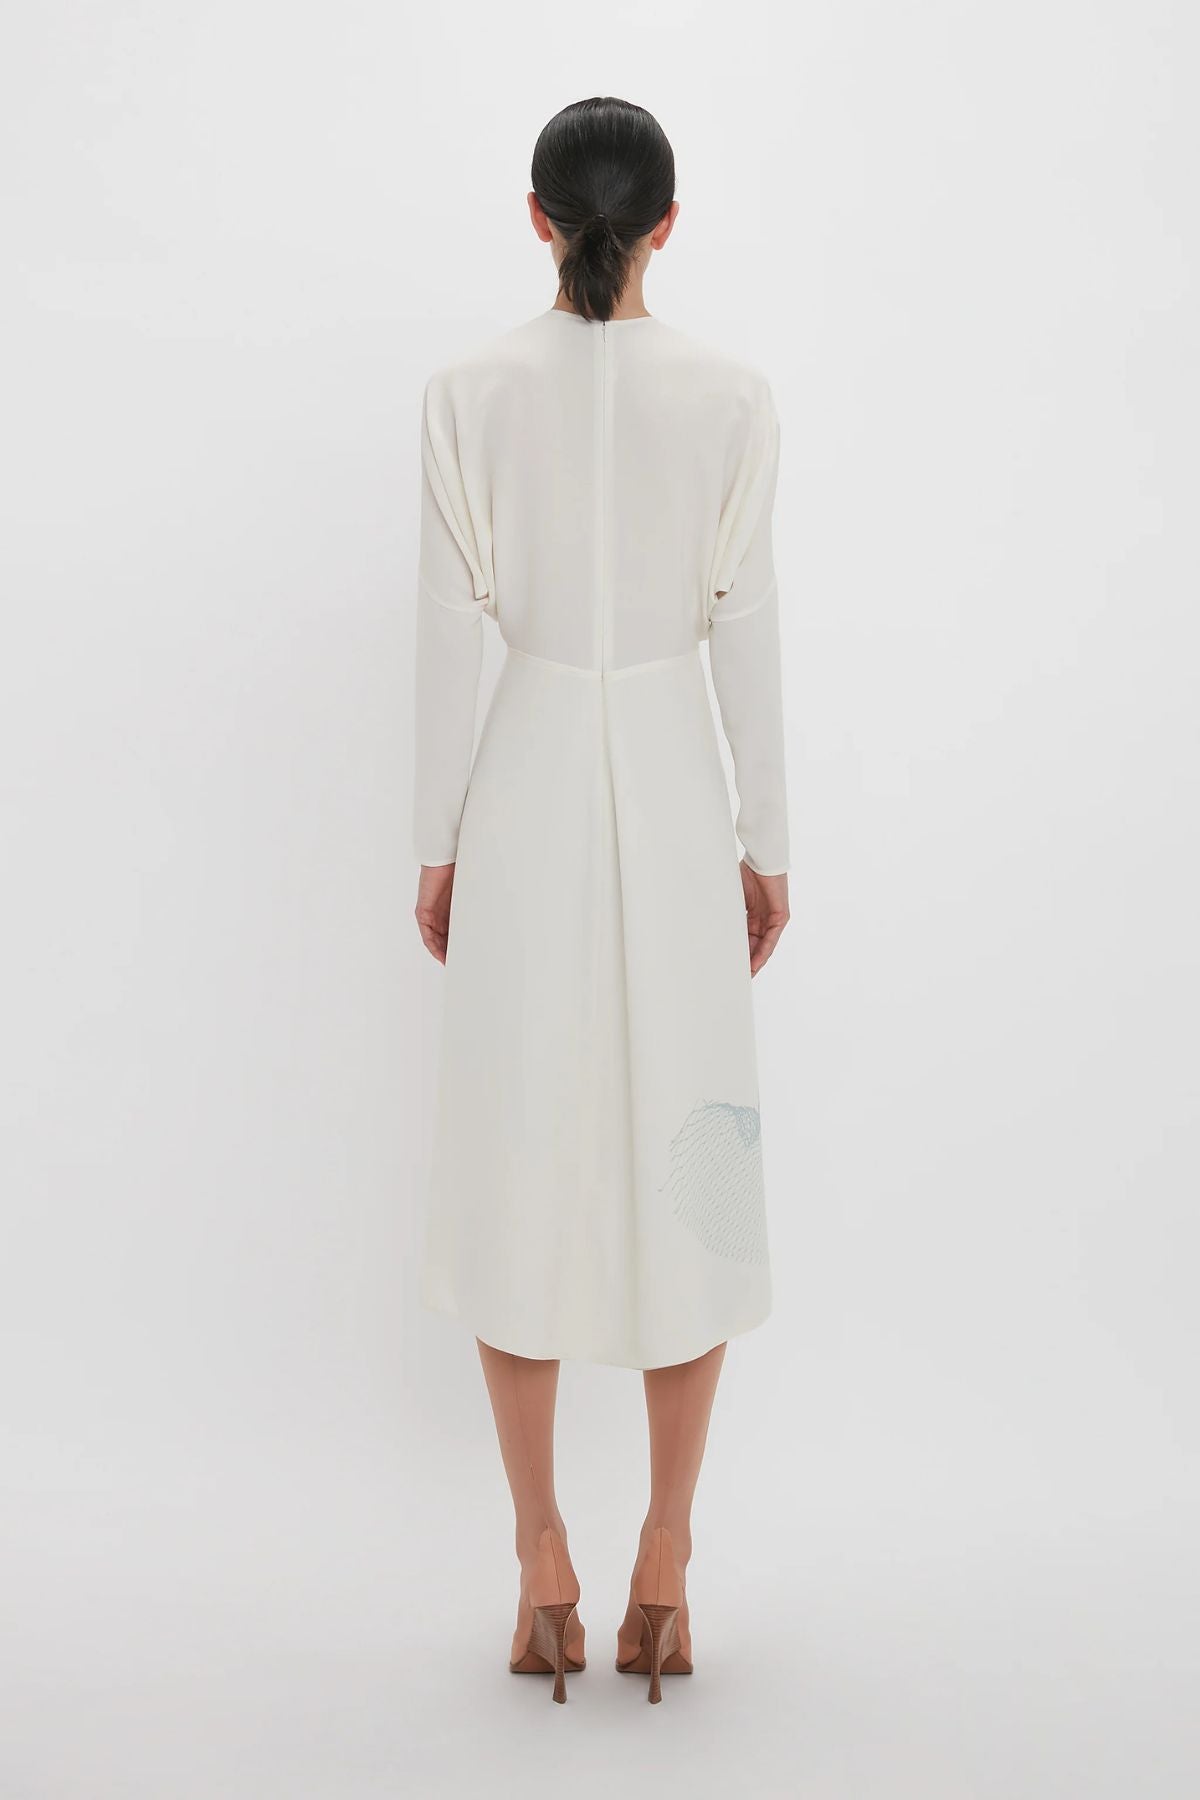 Victoria Beckham Long Sleeve Dolman Midi Dress - White/ Viper Blue